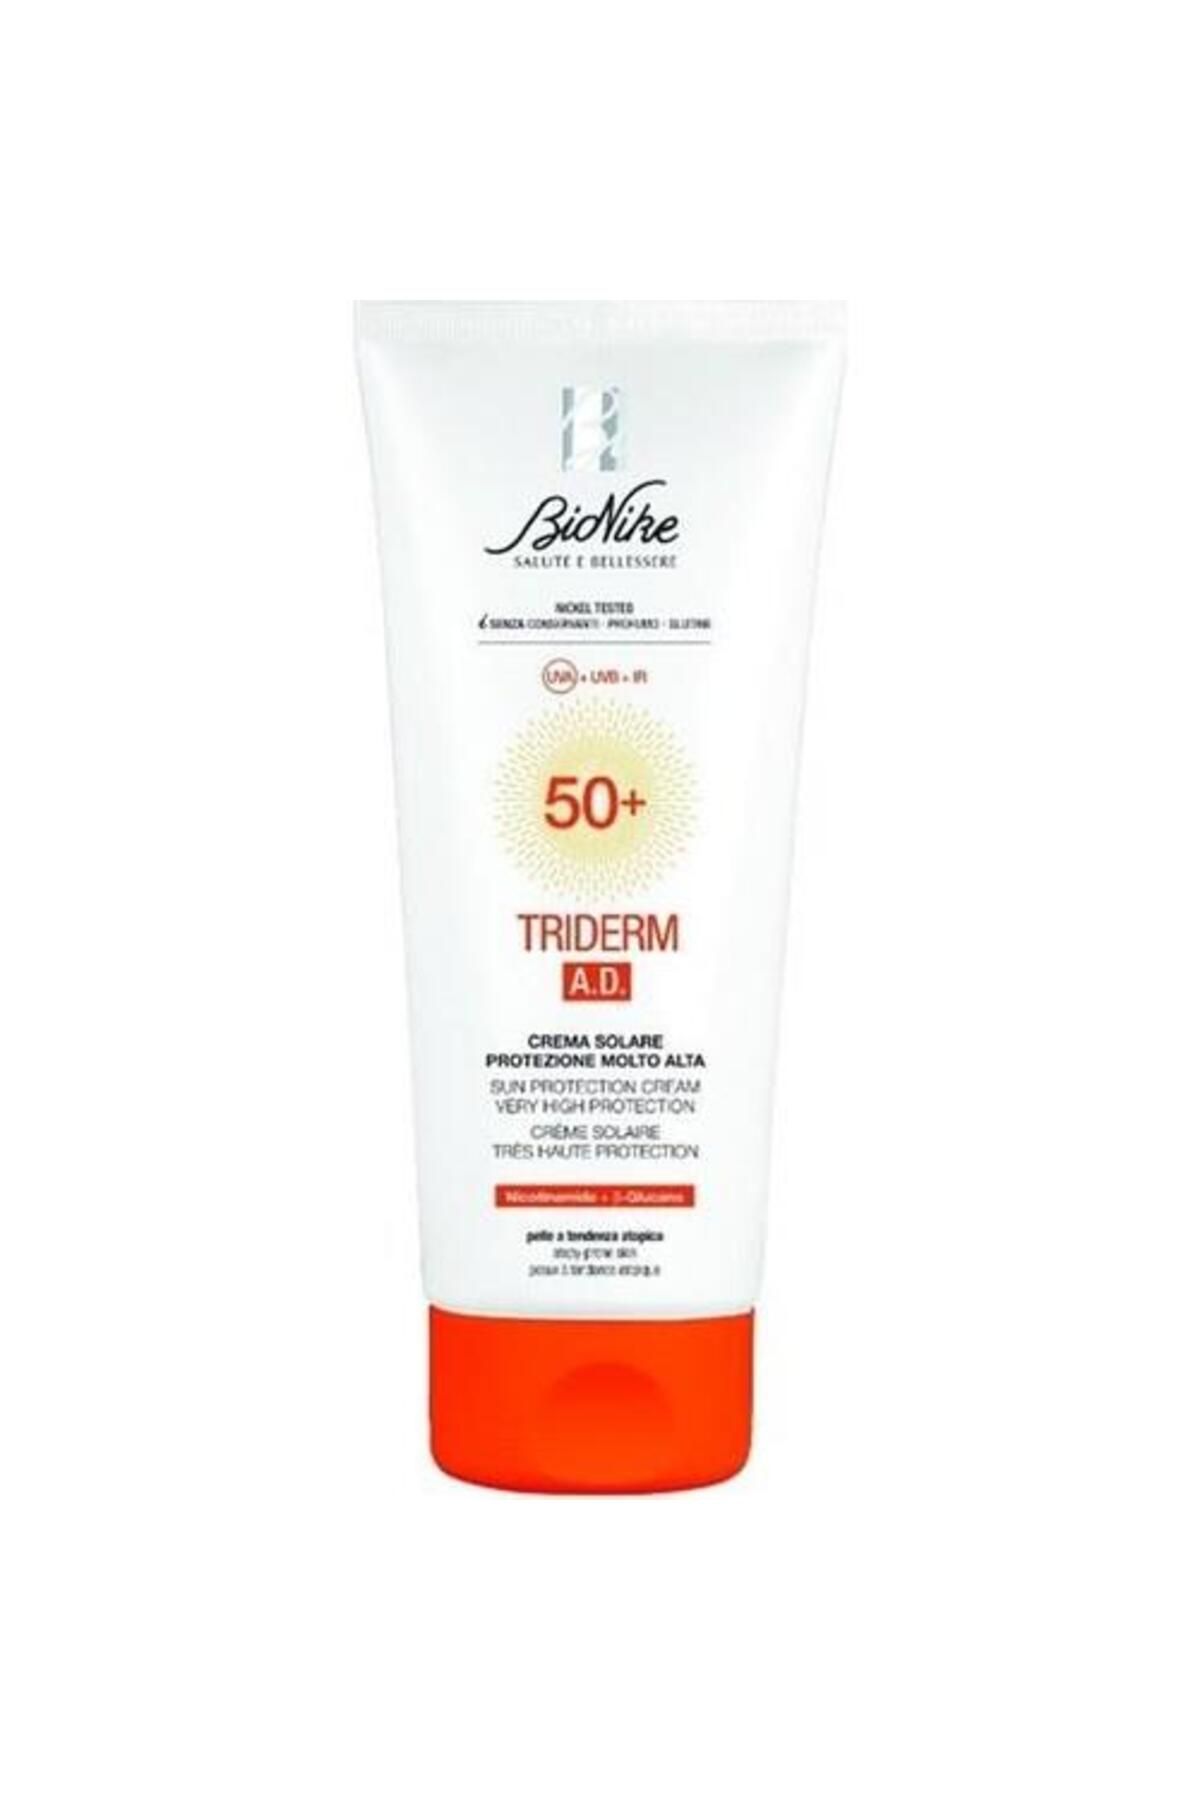 BioNike Triderm A.d. Sun Protection Cream 50 200 ml